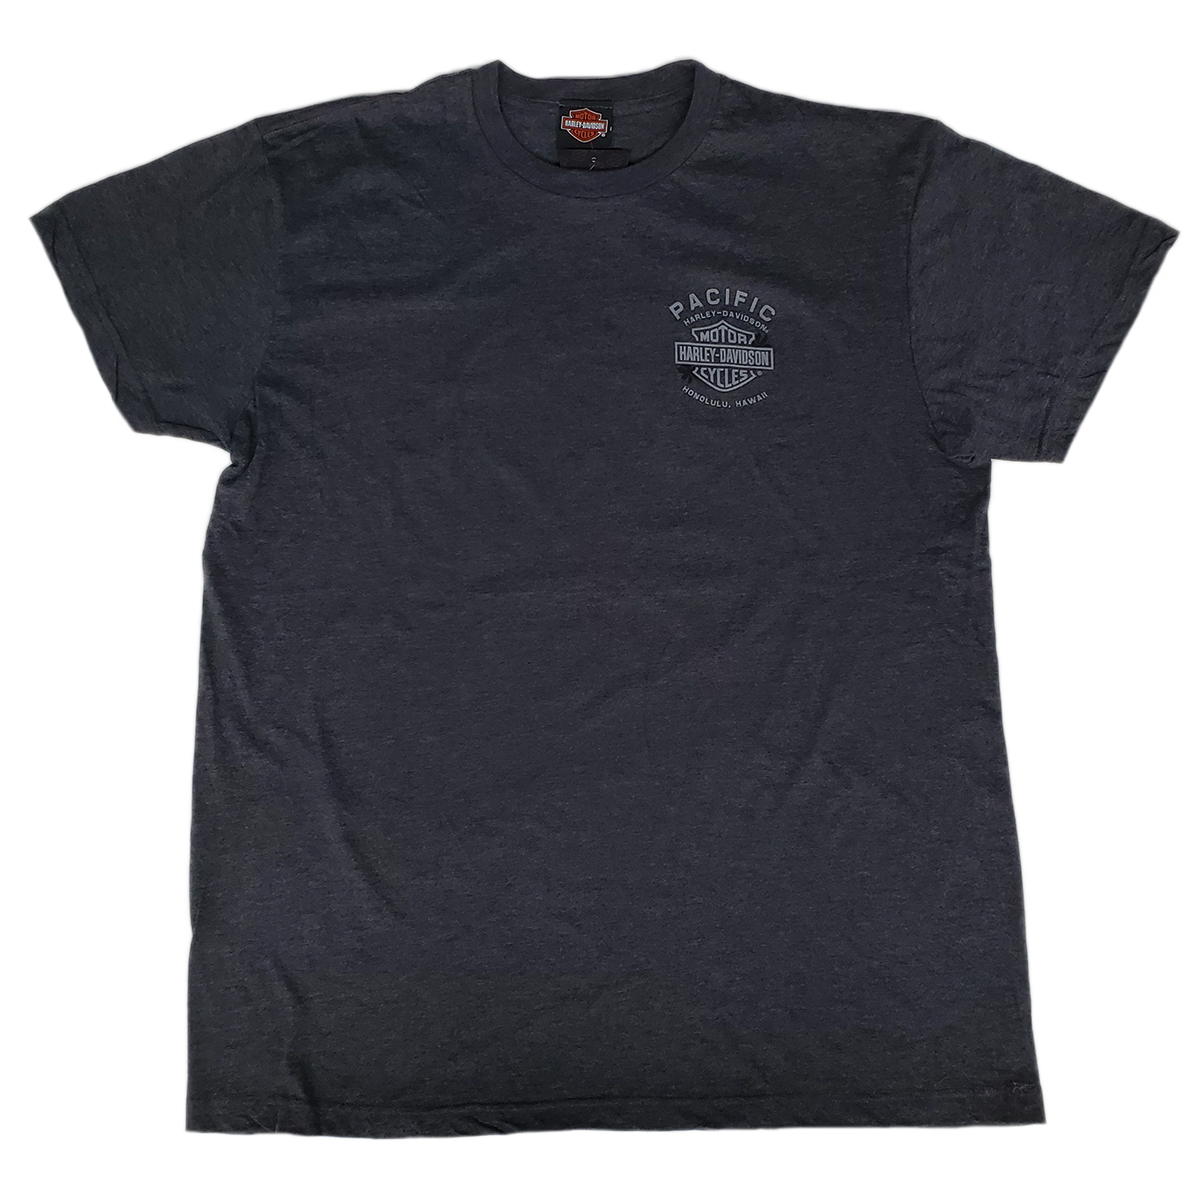 Harley-Davidson Men's Screamin Leaves T-shirt